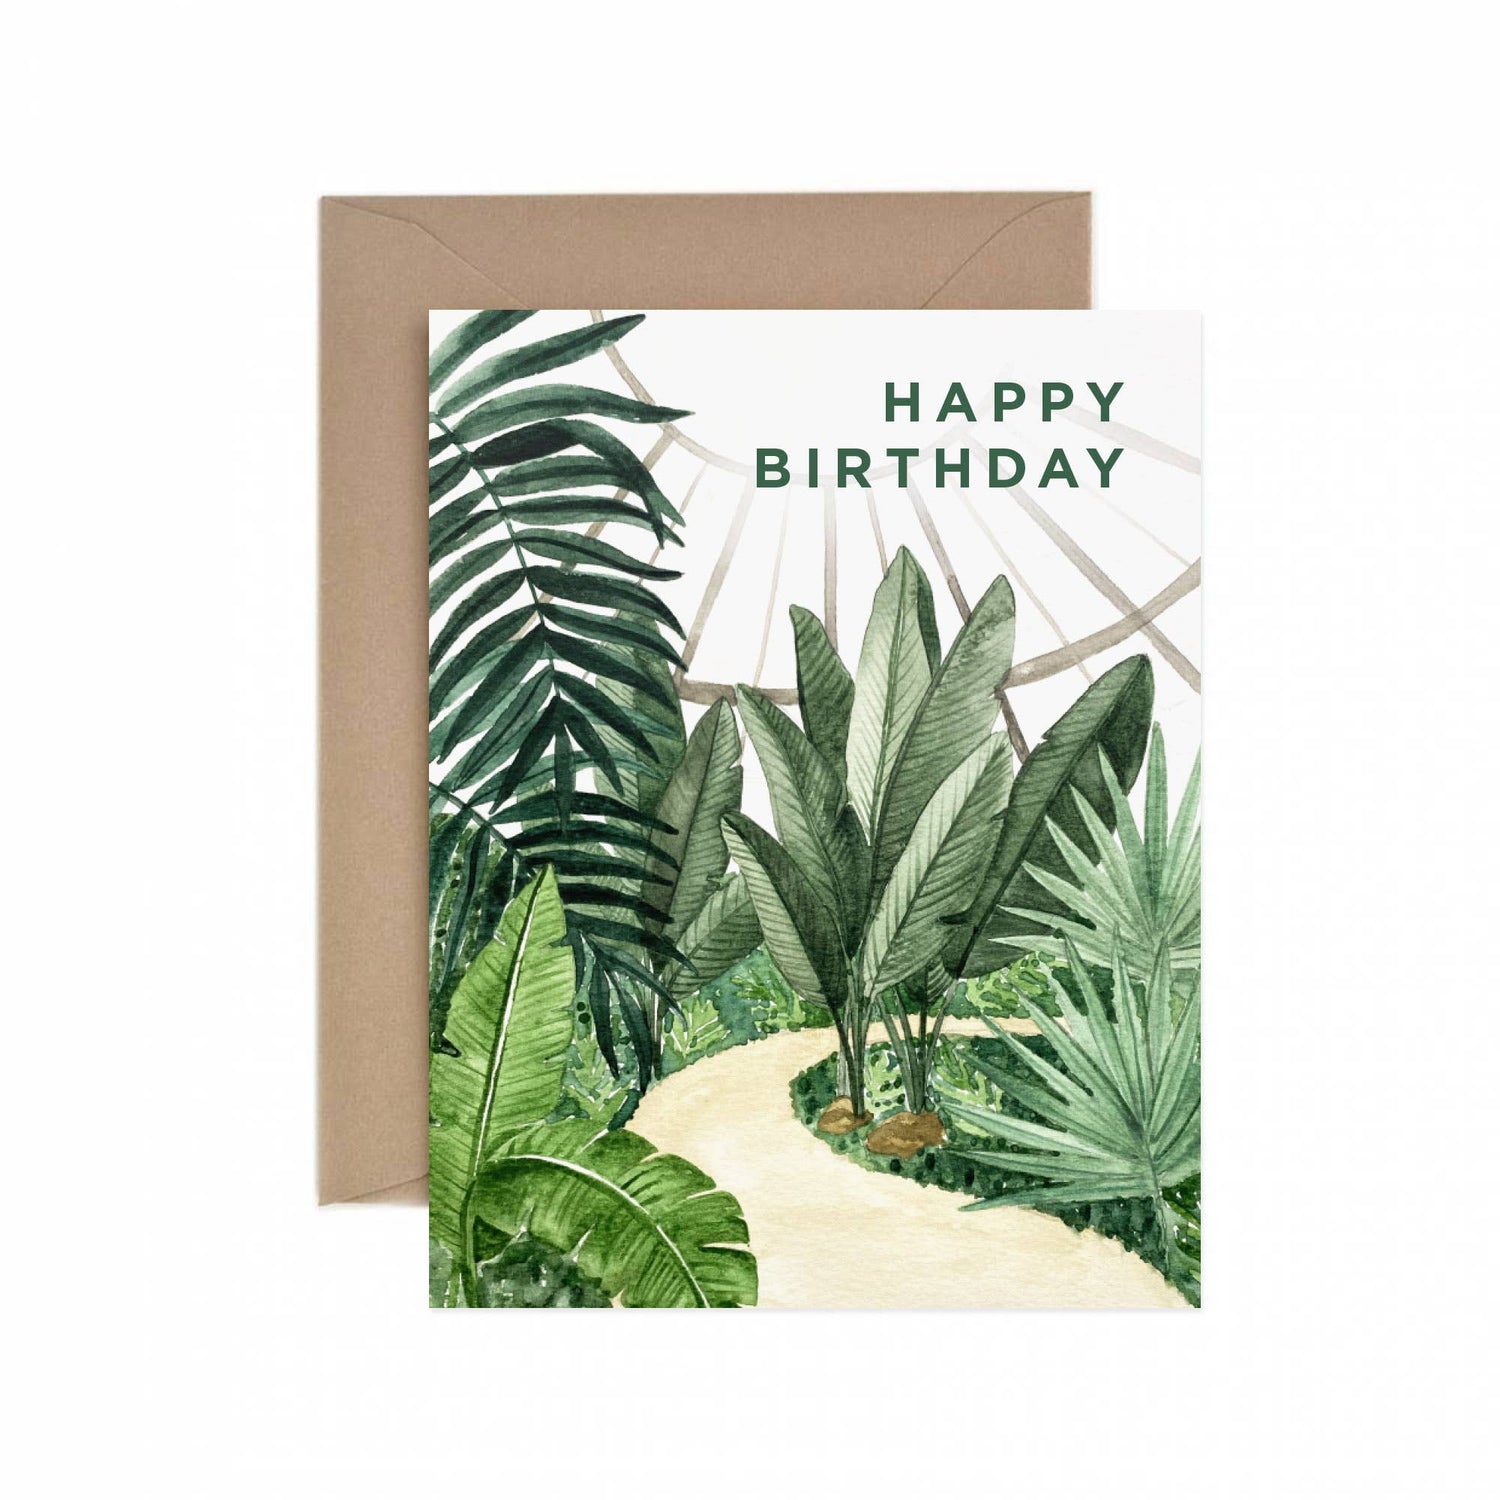 Conservatory Happy Birthday Greeting Card - The Botanical Bar